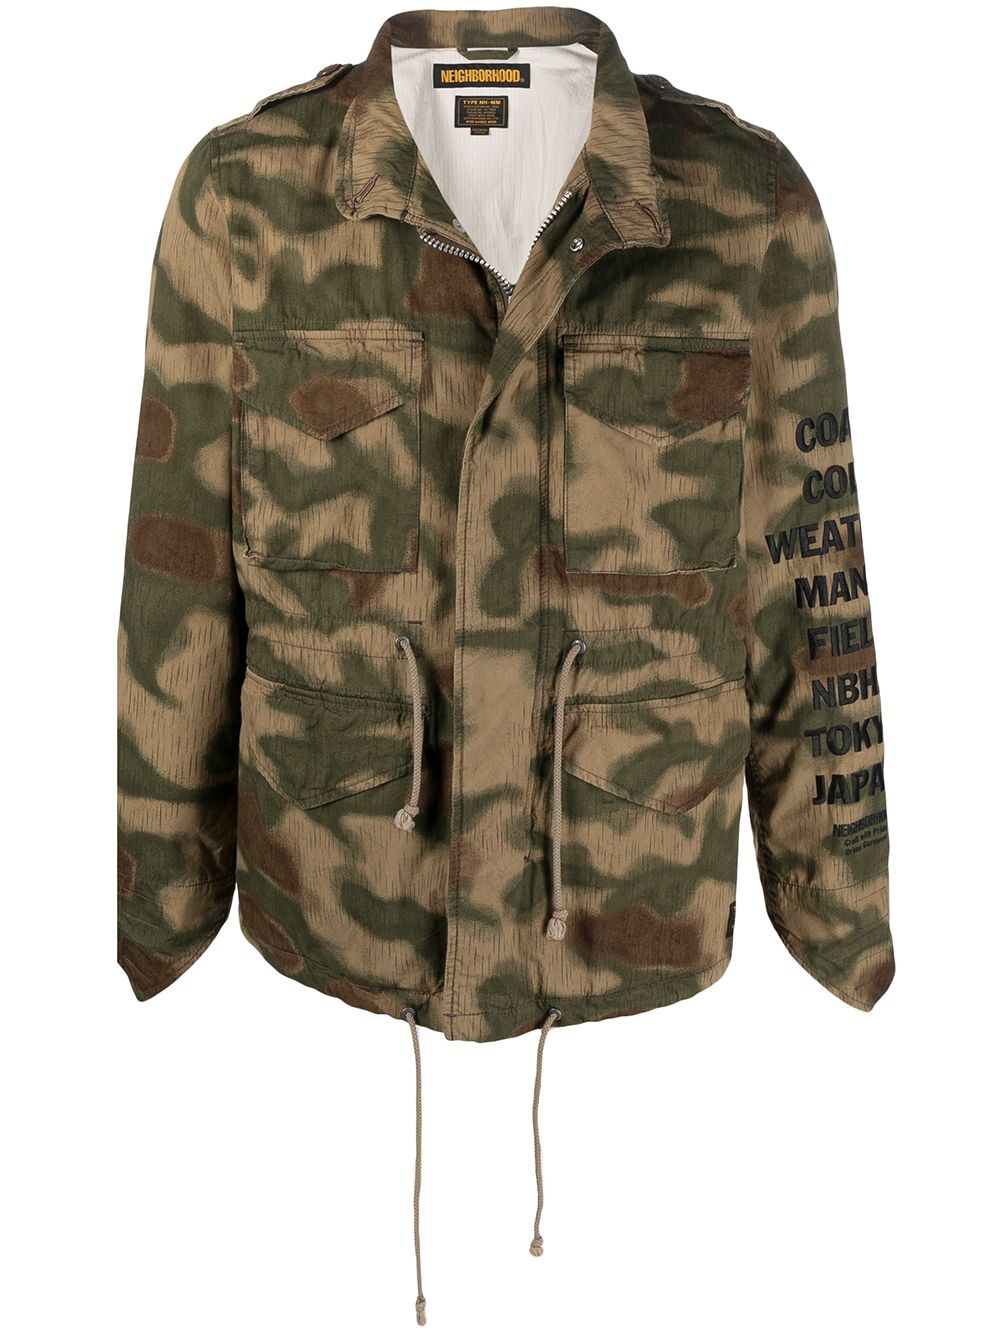 M-65 camouflage print jacket - 1